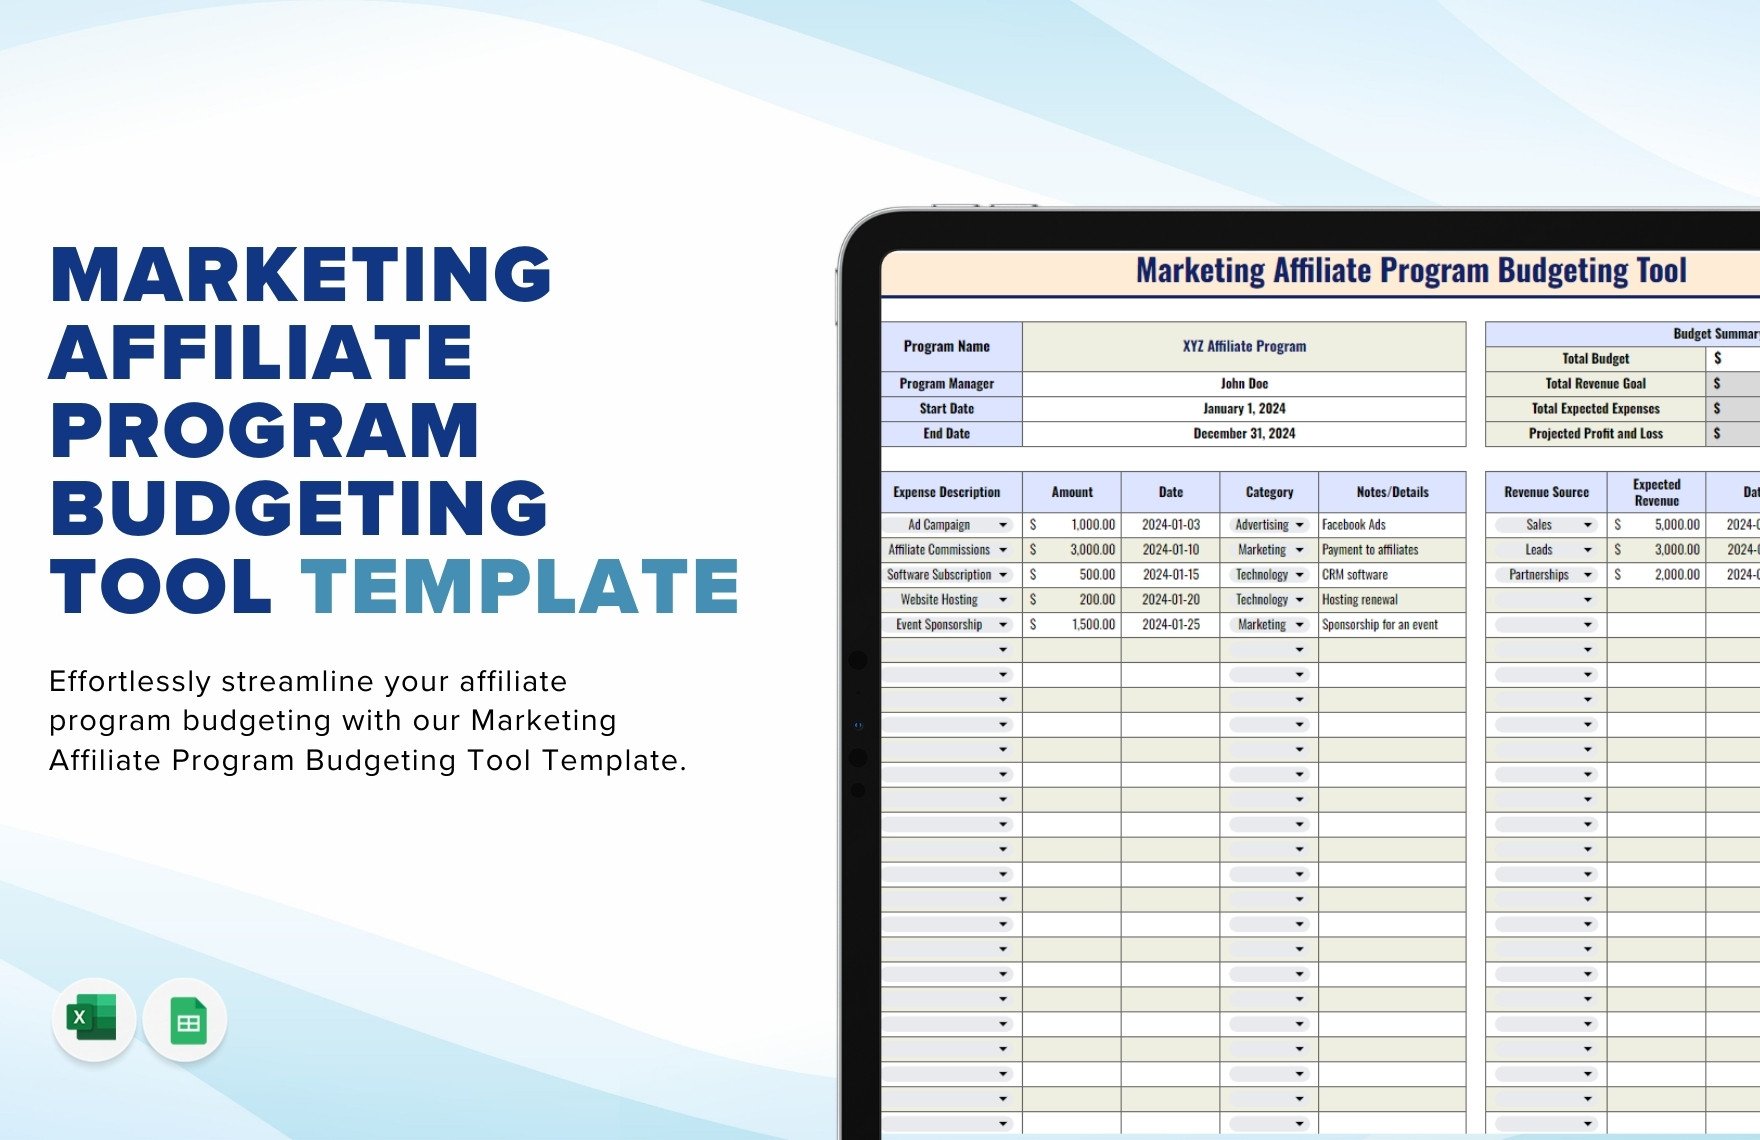 Marketing Affiliate Program Budgeting Tool Template